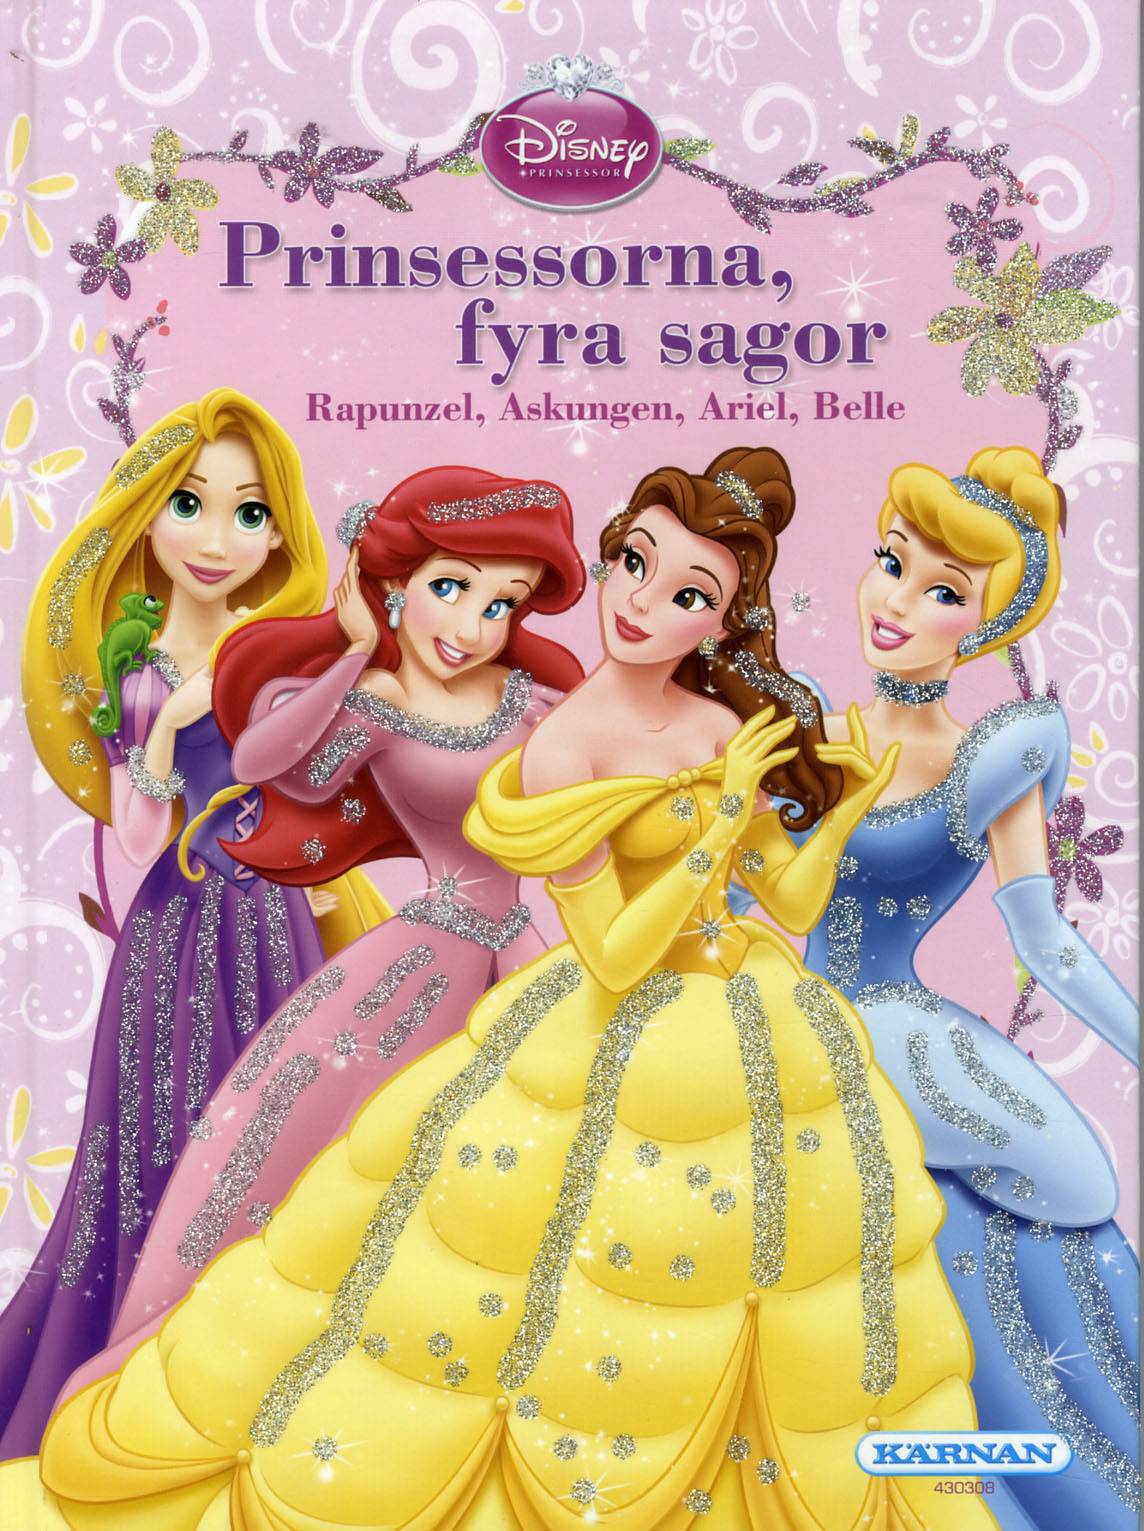 Prinsessorna, fyra sagor : Rapunzel, Askungen, Ariel, Belle